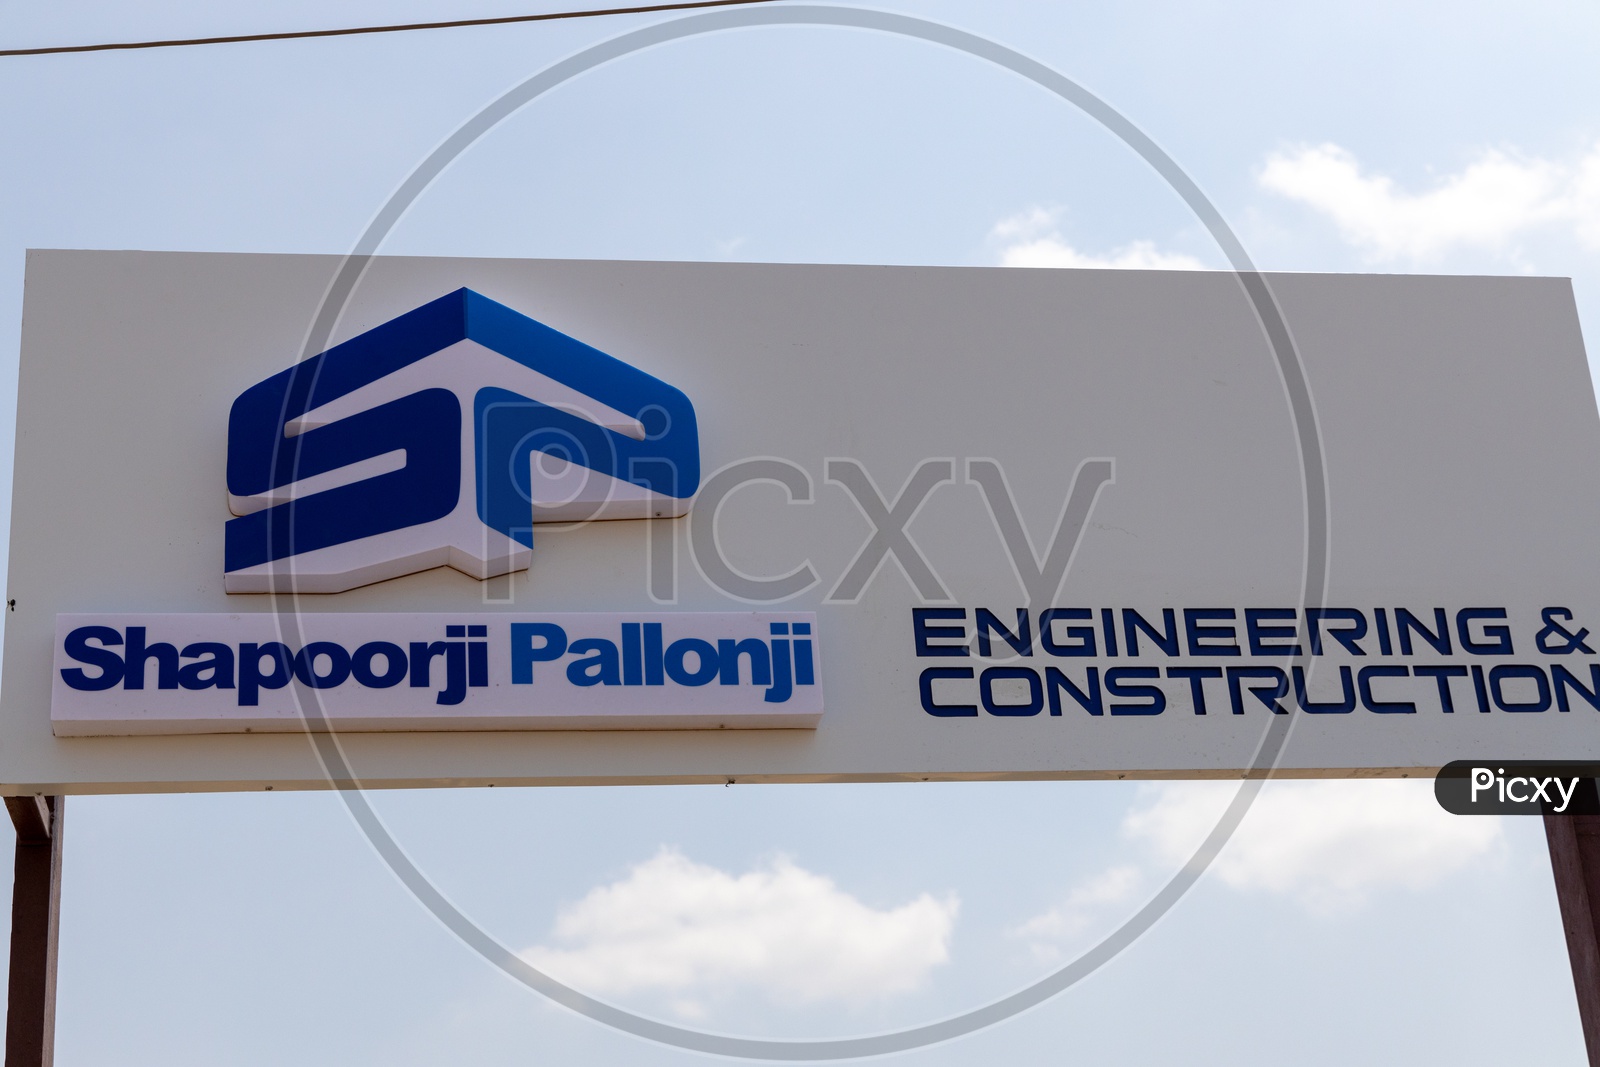 10 New Projects of Shapoorji Pallonji Group | by Mangesh K | Medium